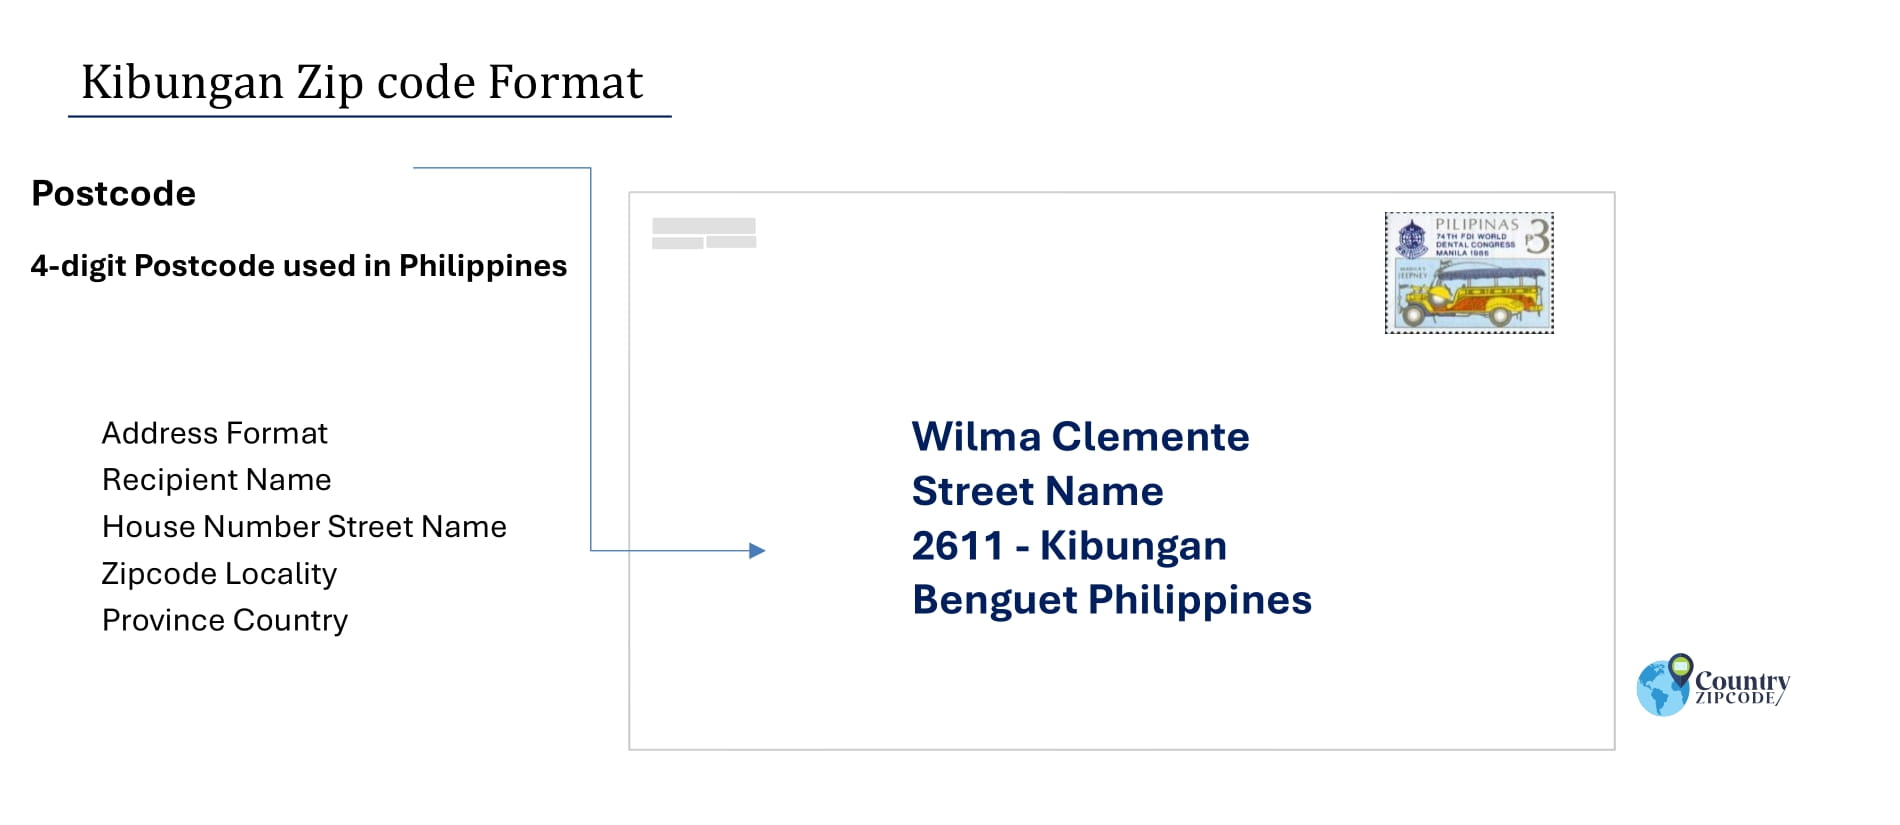 example of Kibungan Philippines zip code and address format